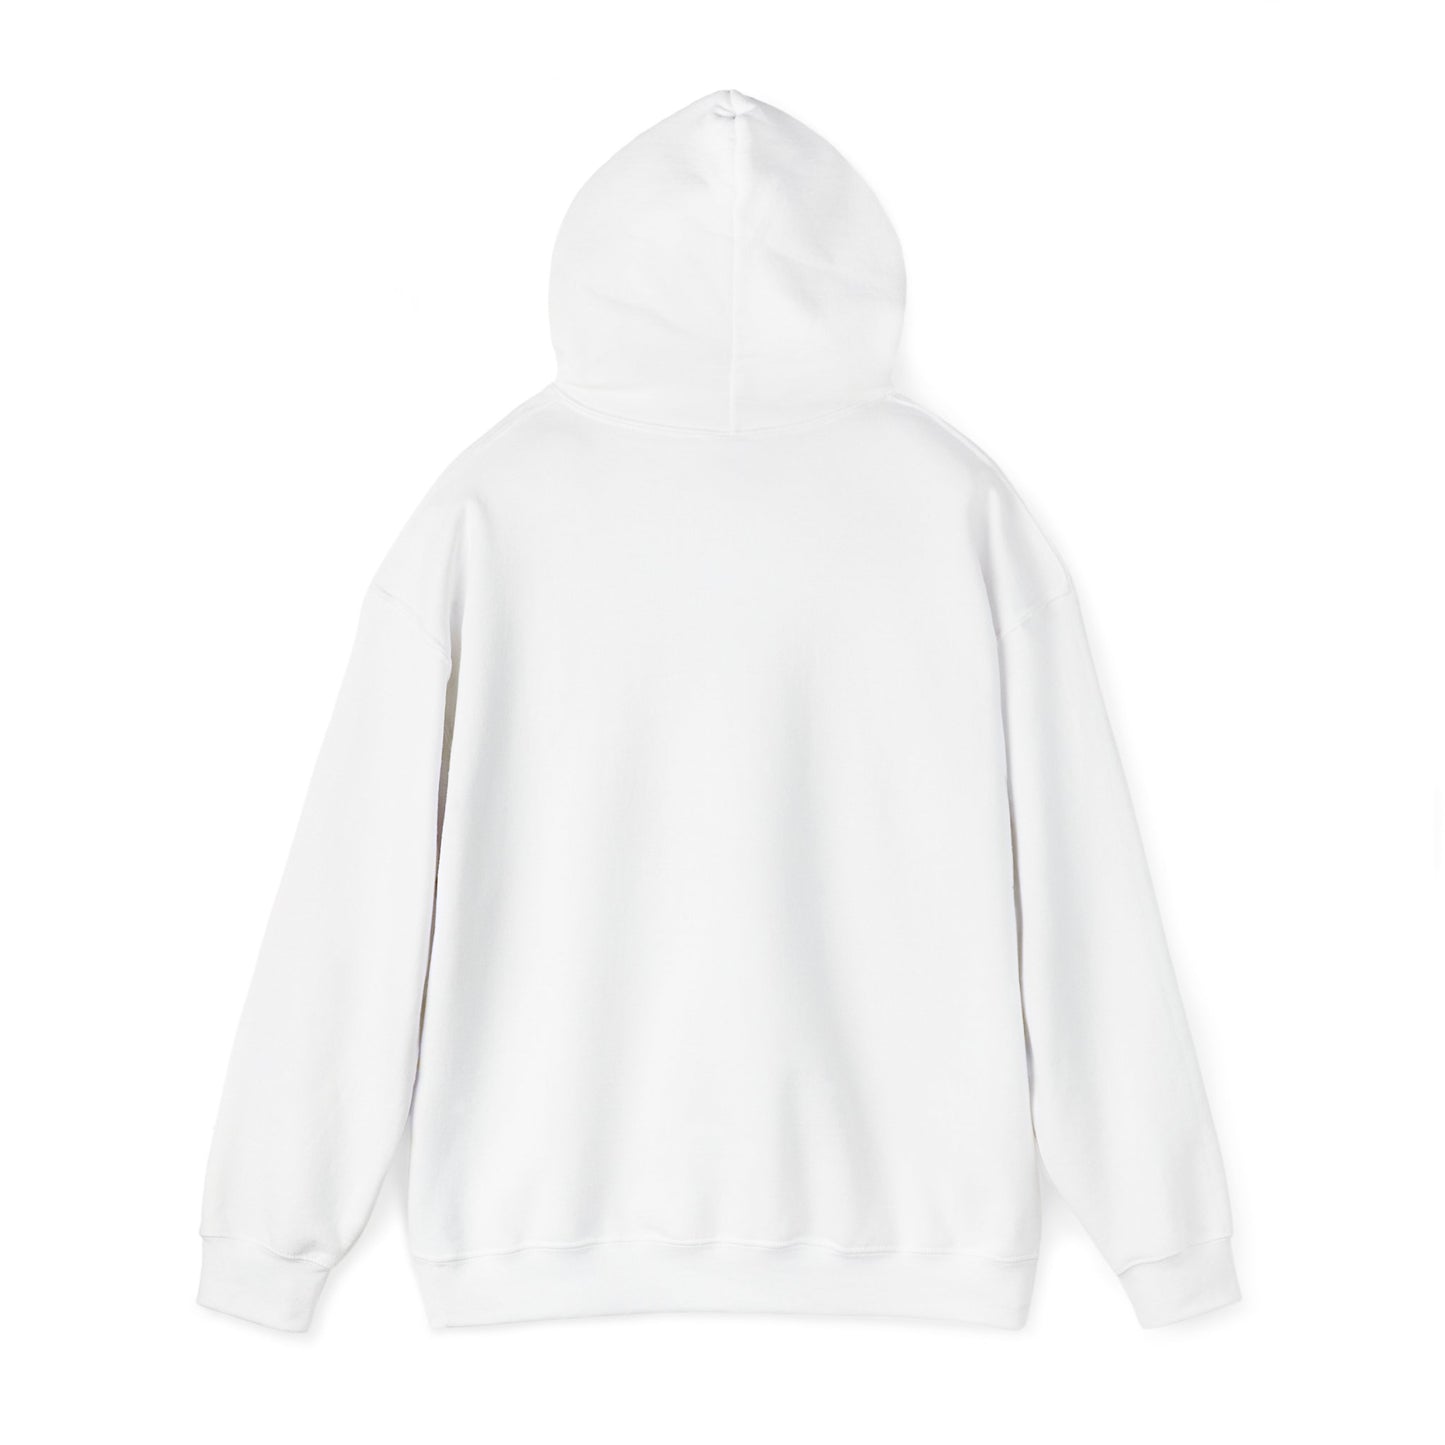 Unisex Heavy Blend™ Breathe Hooded Sweatshirt